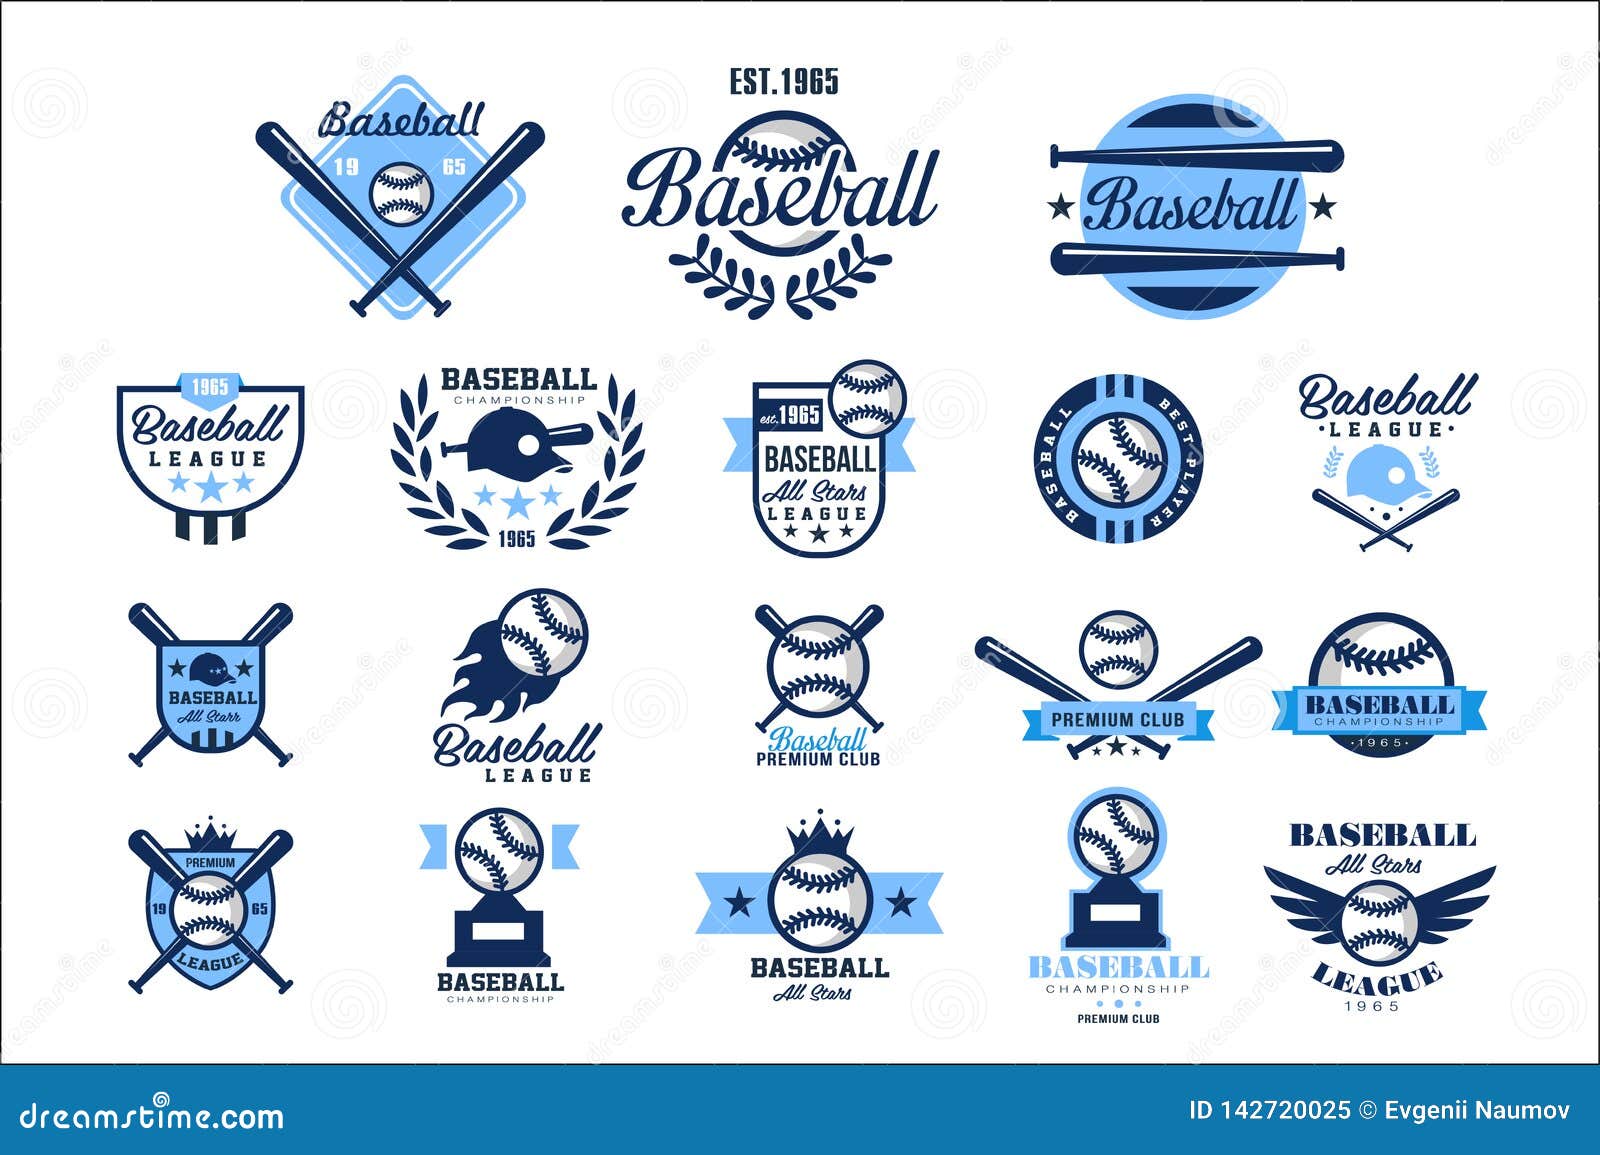 Baseball championship all star badge logo emblem Vector Image